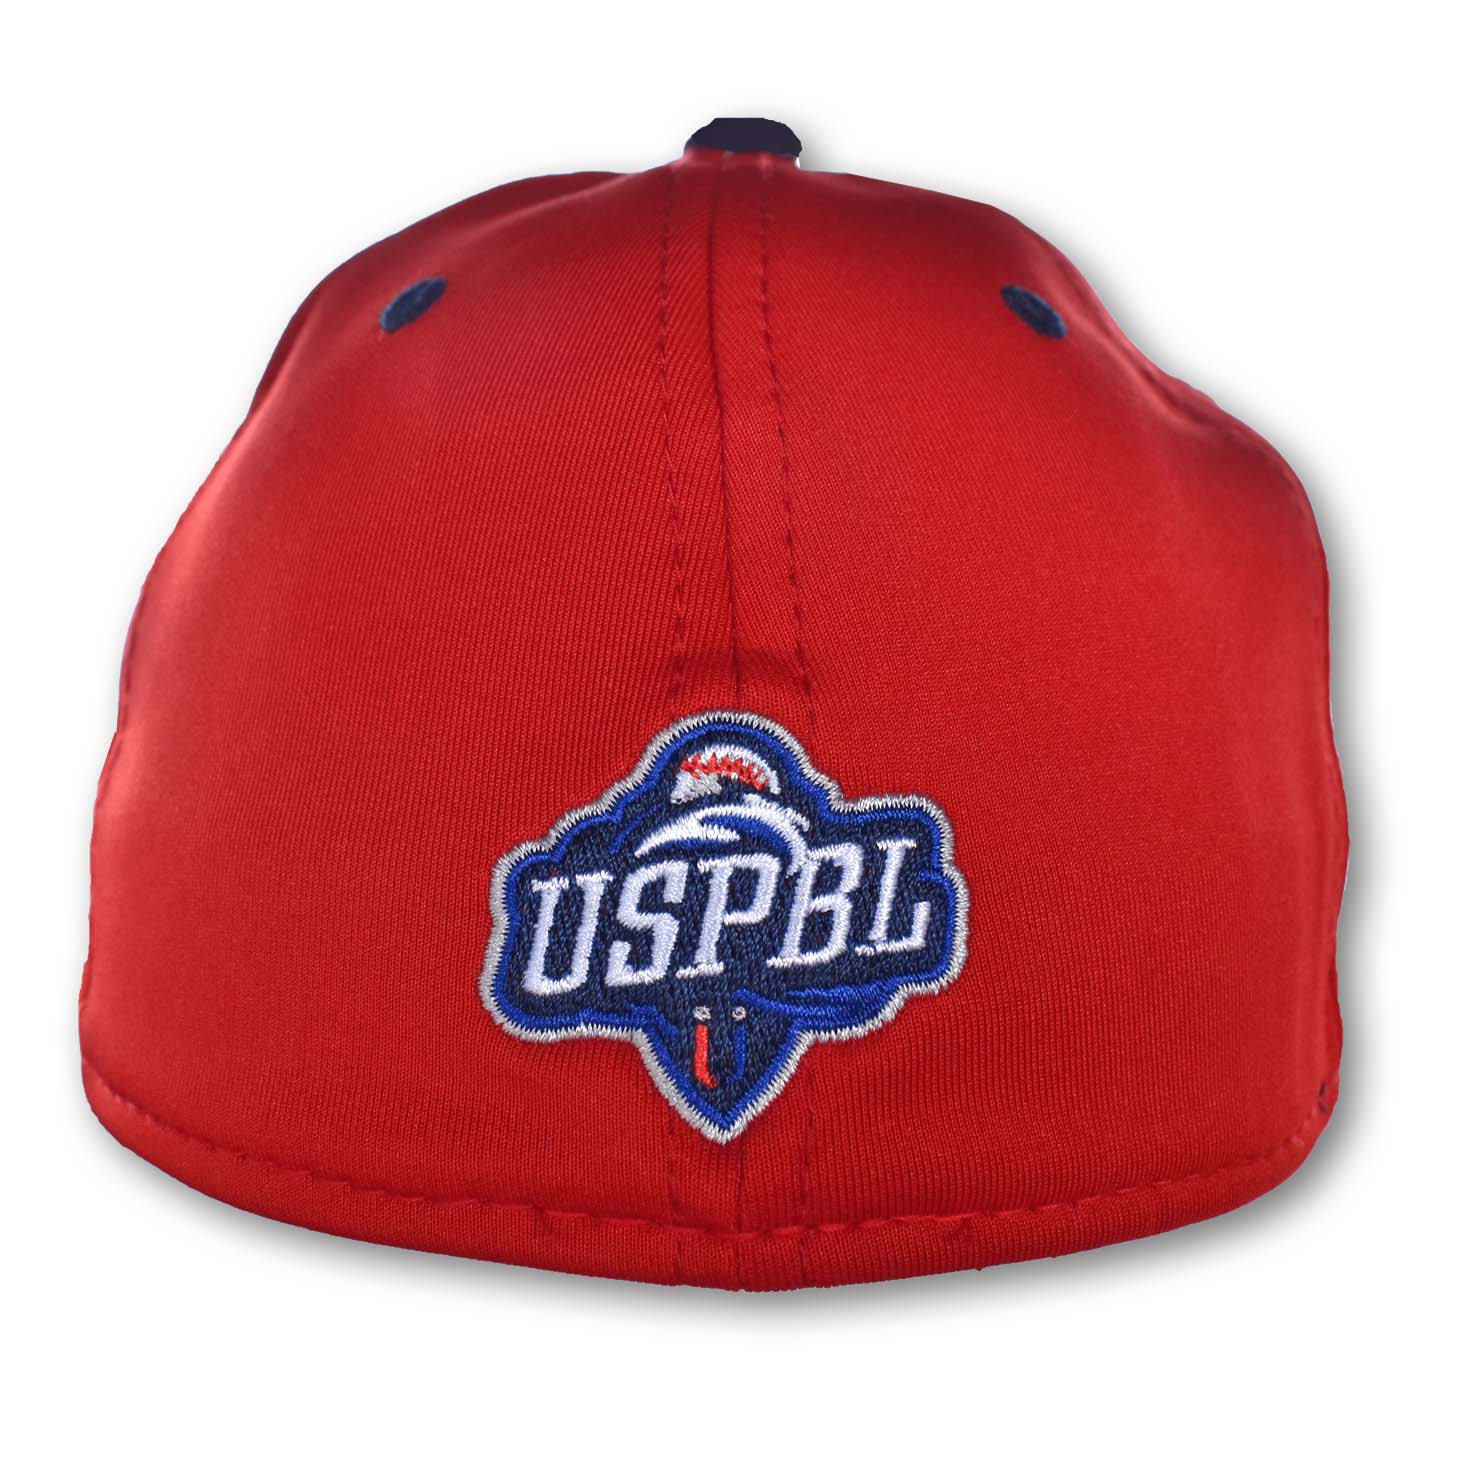 Beavers Red Away Game Hat - United Shore Professional Baseball League  (USPBL)